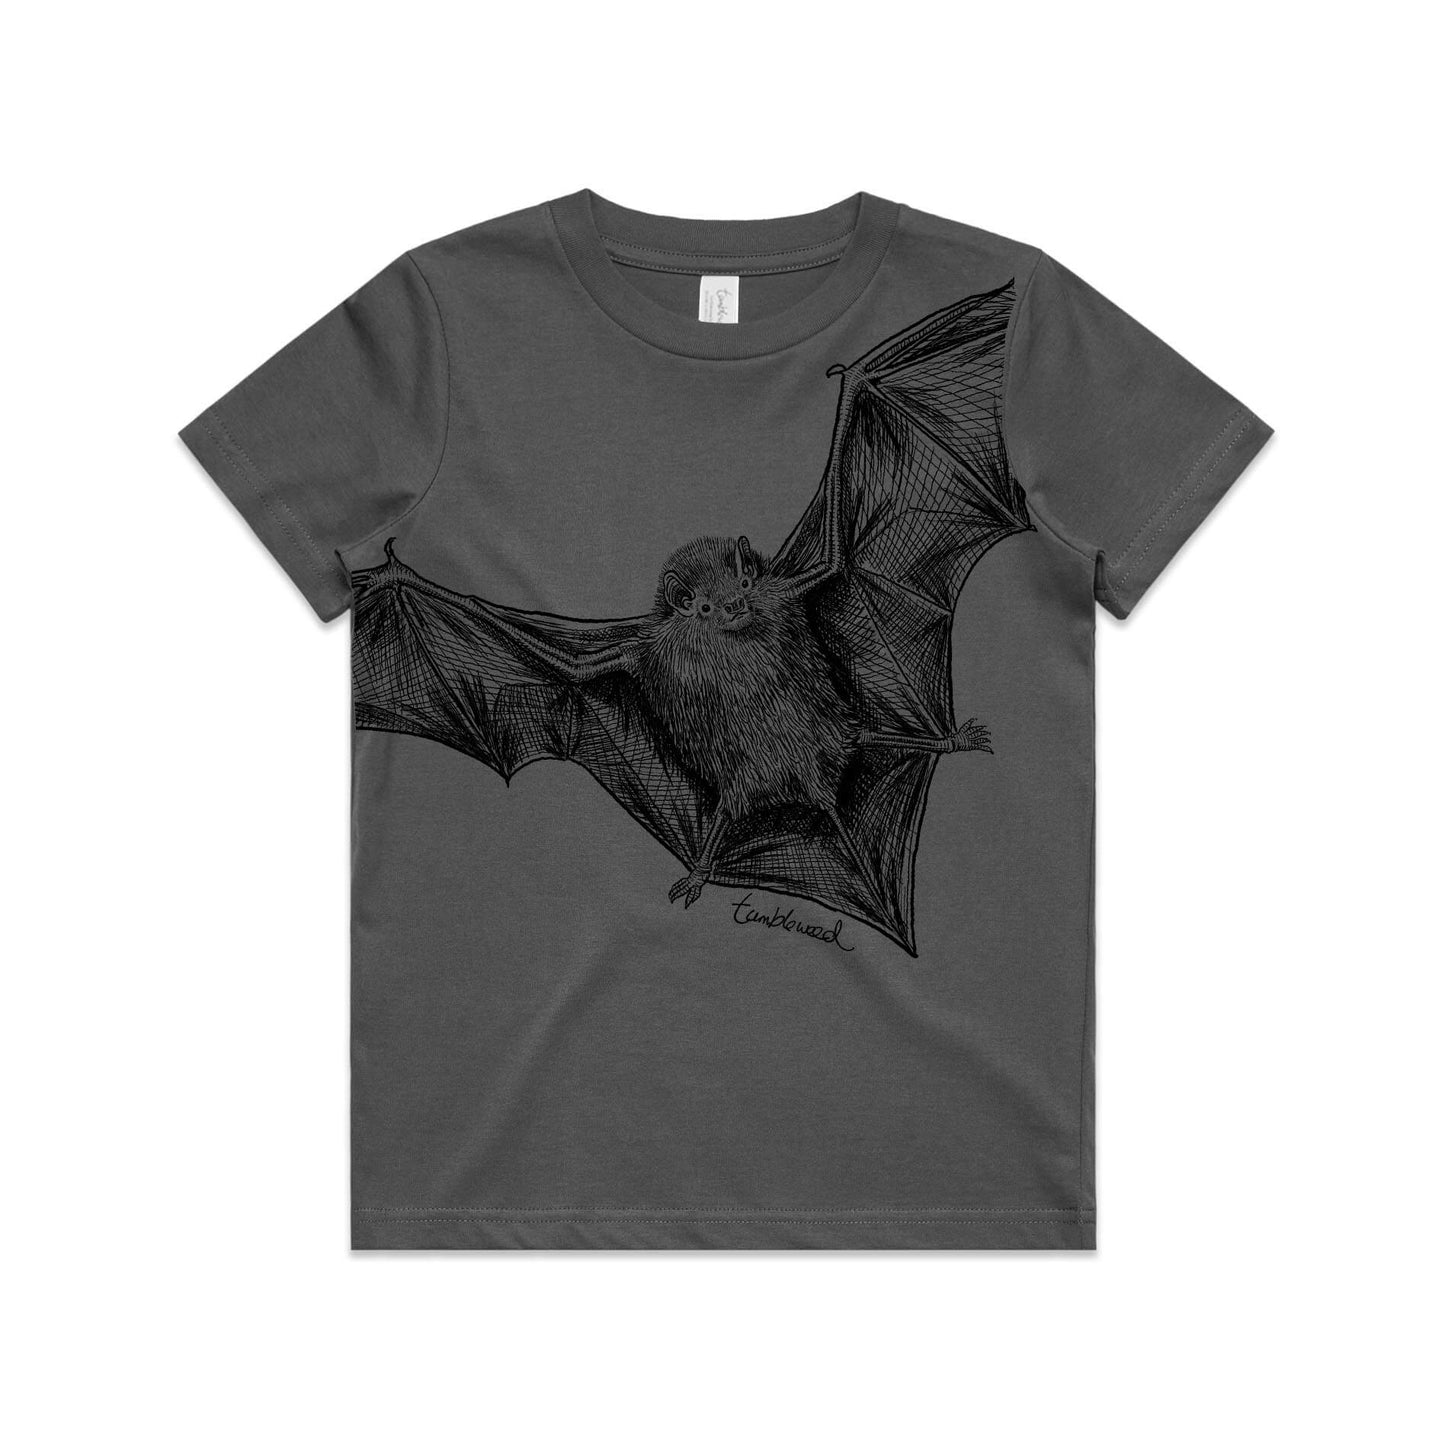 Charcoal, cotton kids' t-shirt with screen printed Kids bat design.